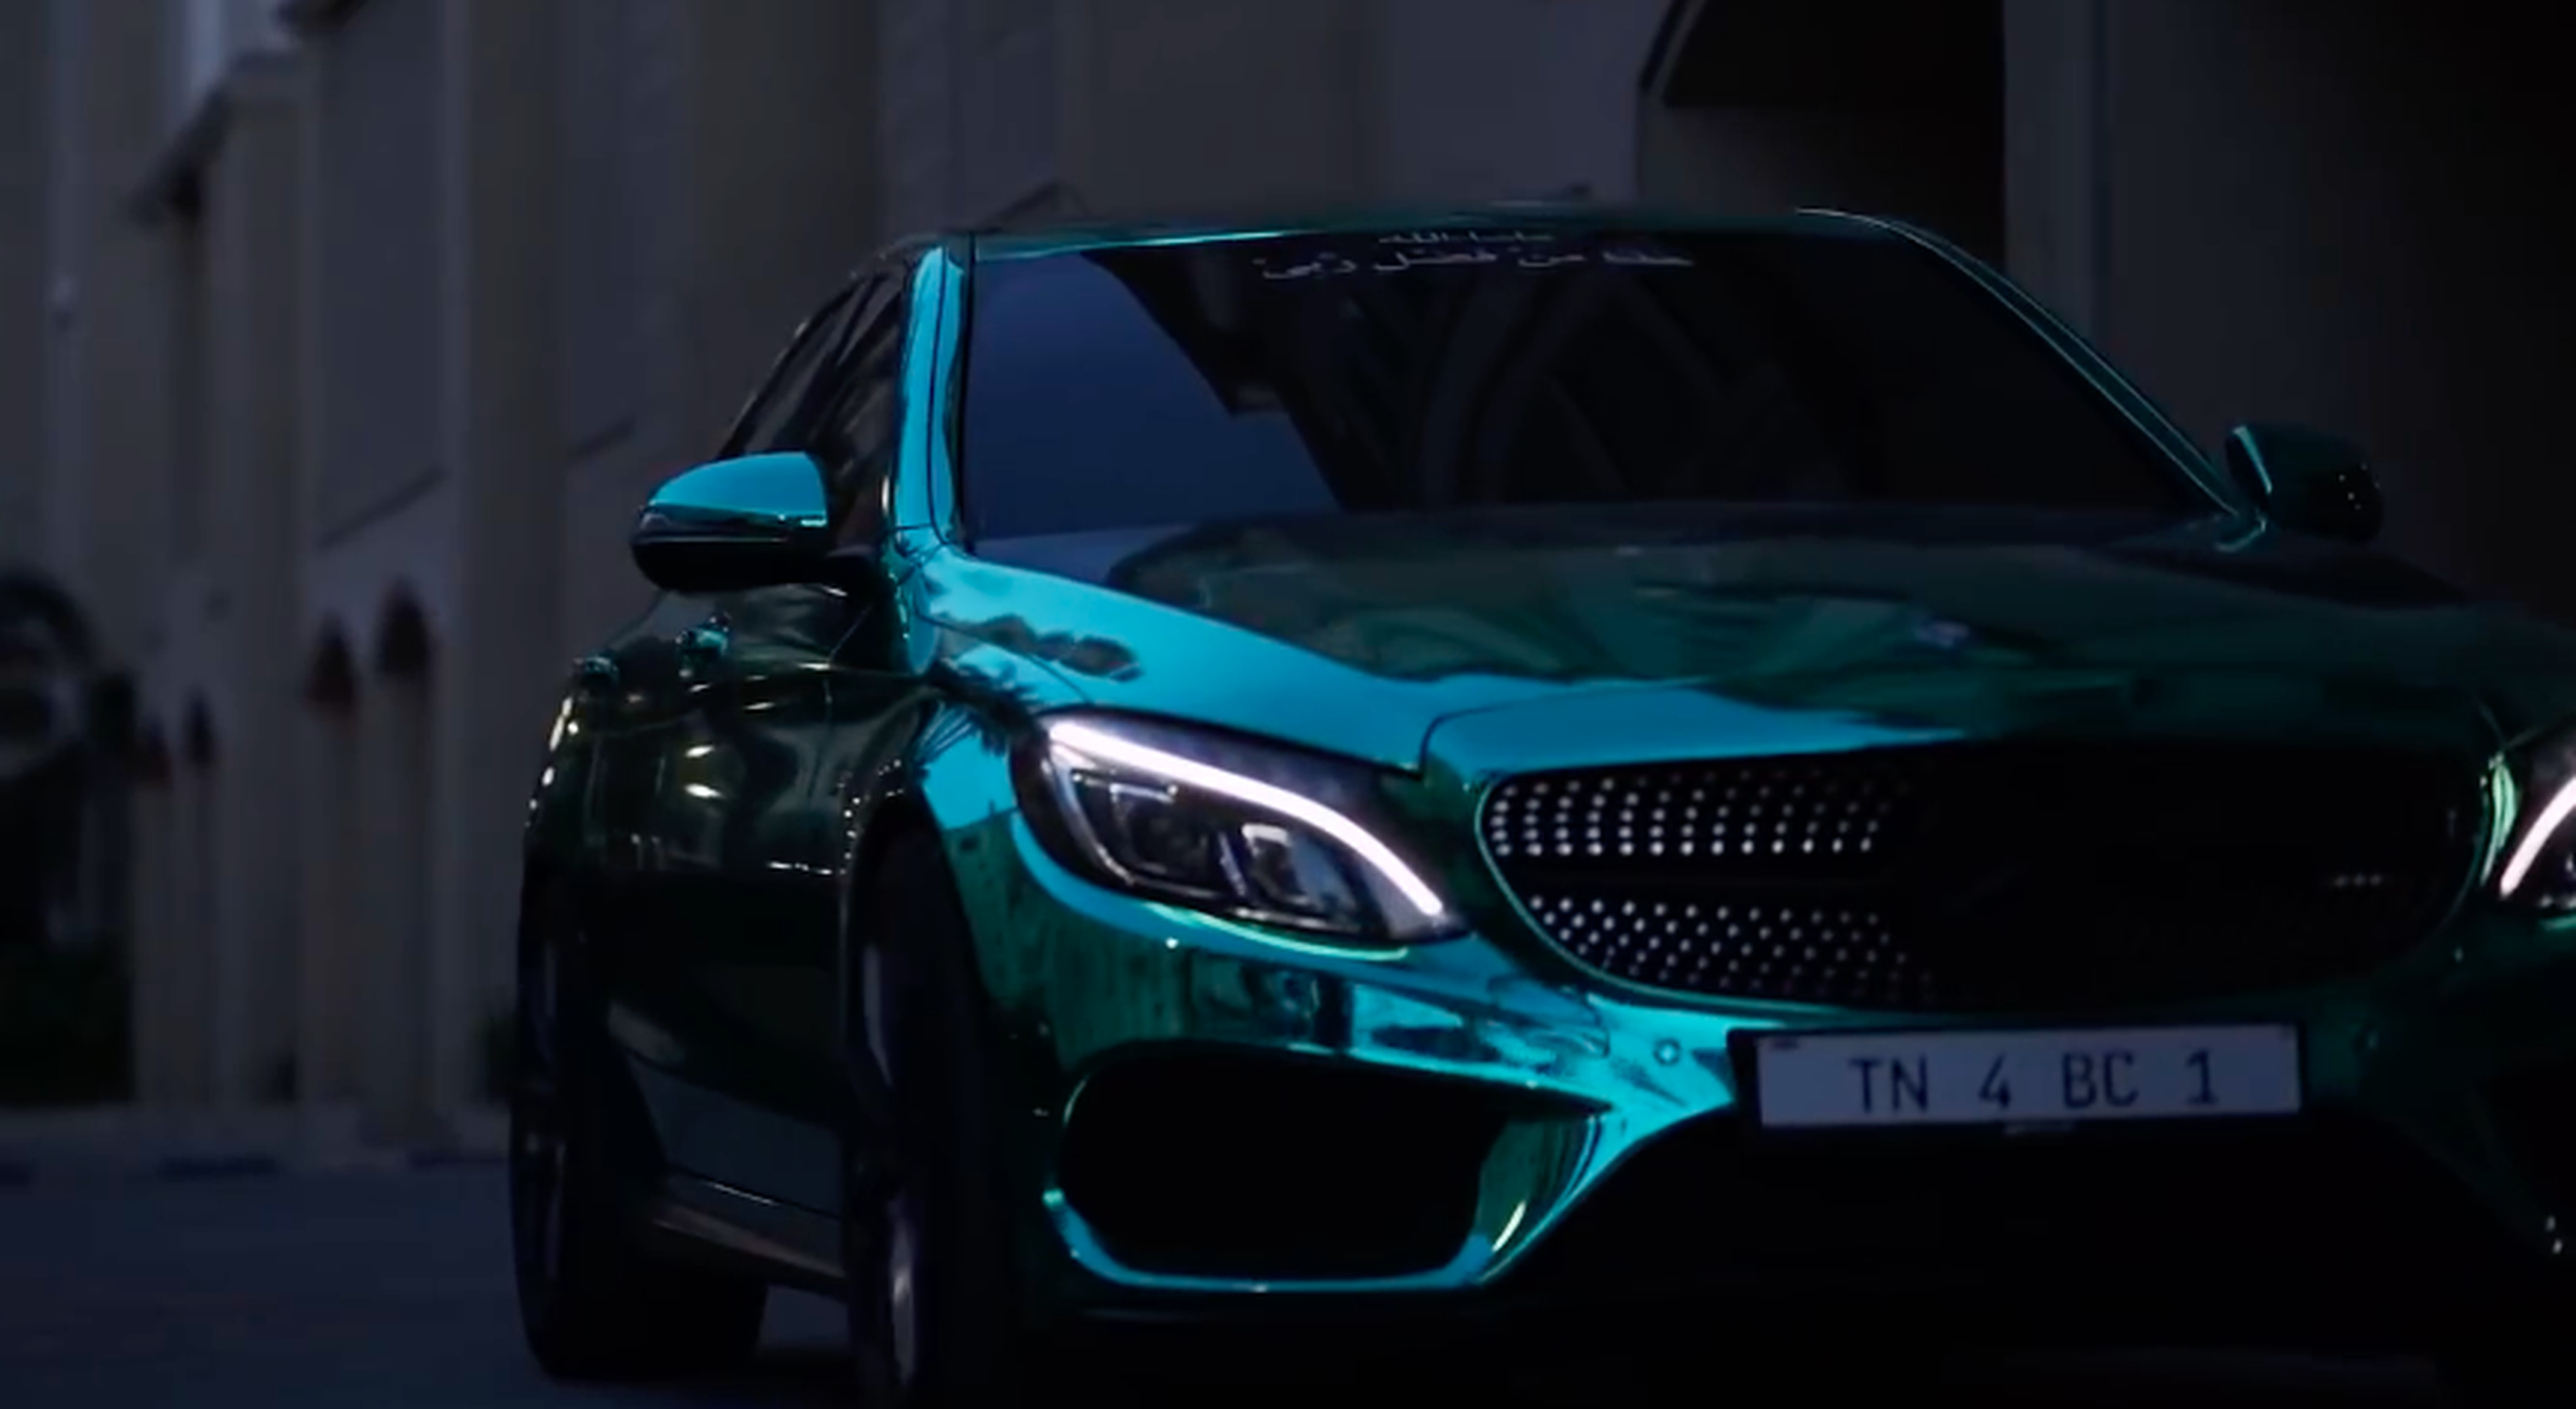 VÍDEO: Así de espectacular suena este Mercedes Benz C43 AMG